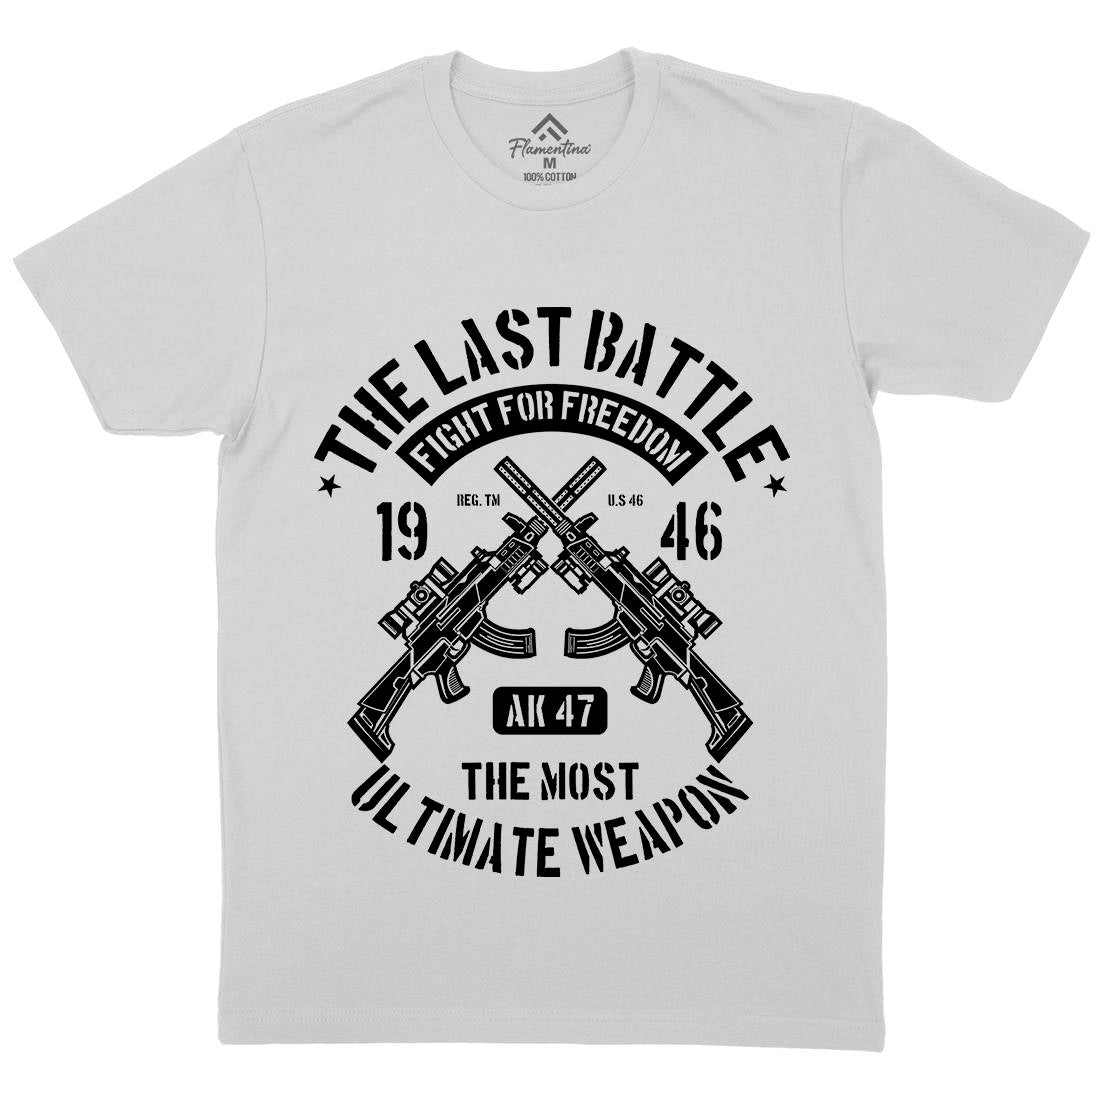 Last Battle Mens Crew Neck T-Shirt Army A174